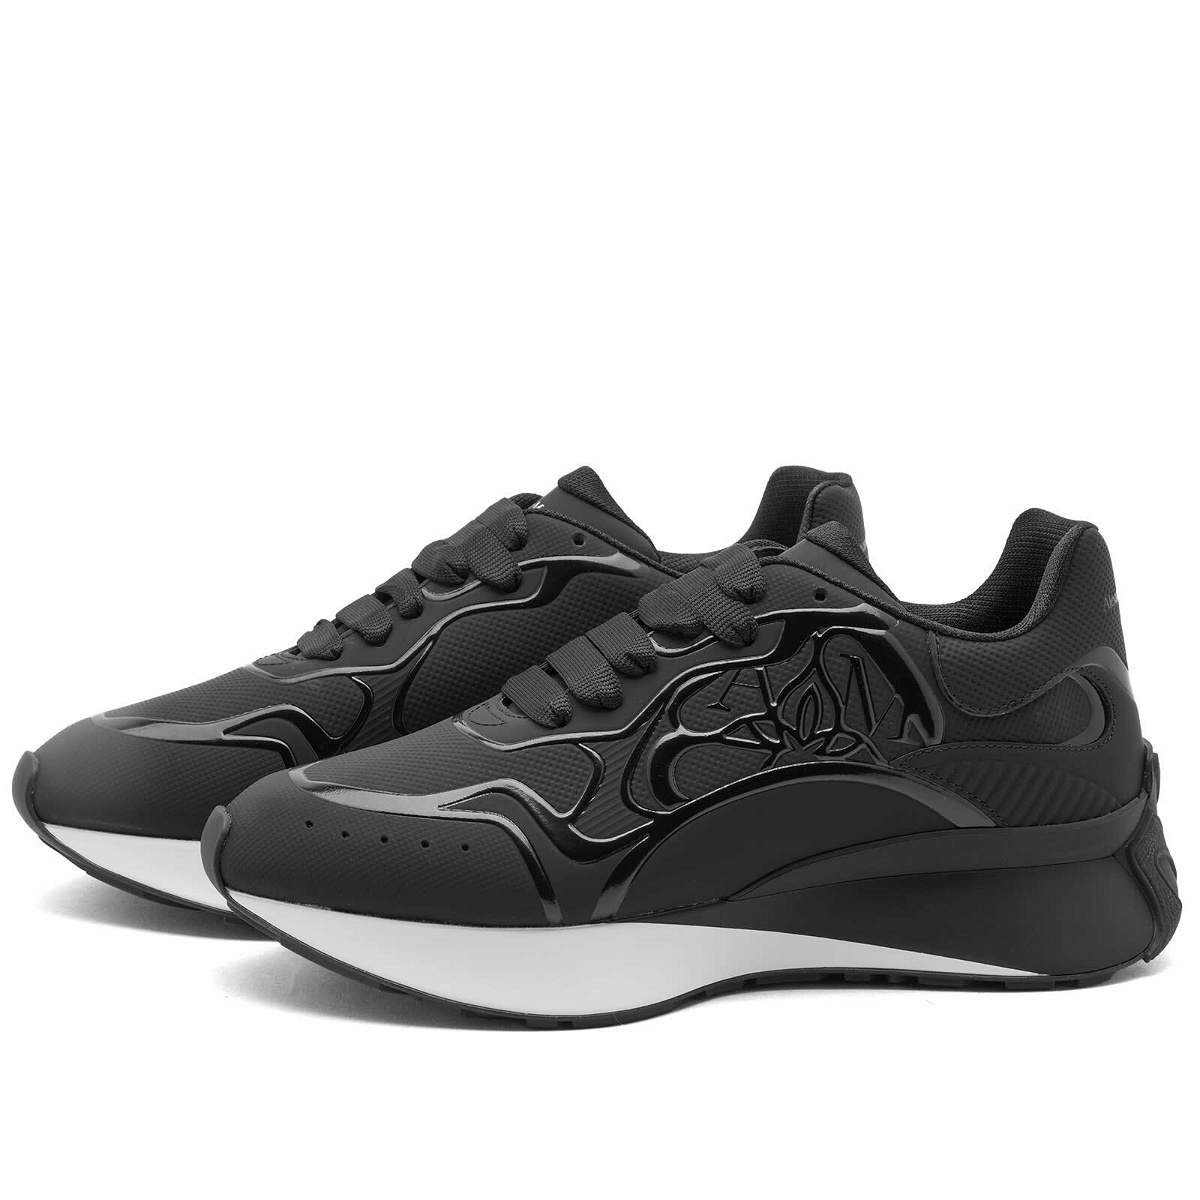 mcq alexander mcqueen Platform Plimsoll Trainers Shoes Sneakers Size 4  Black... | eBay